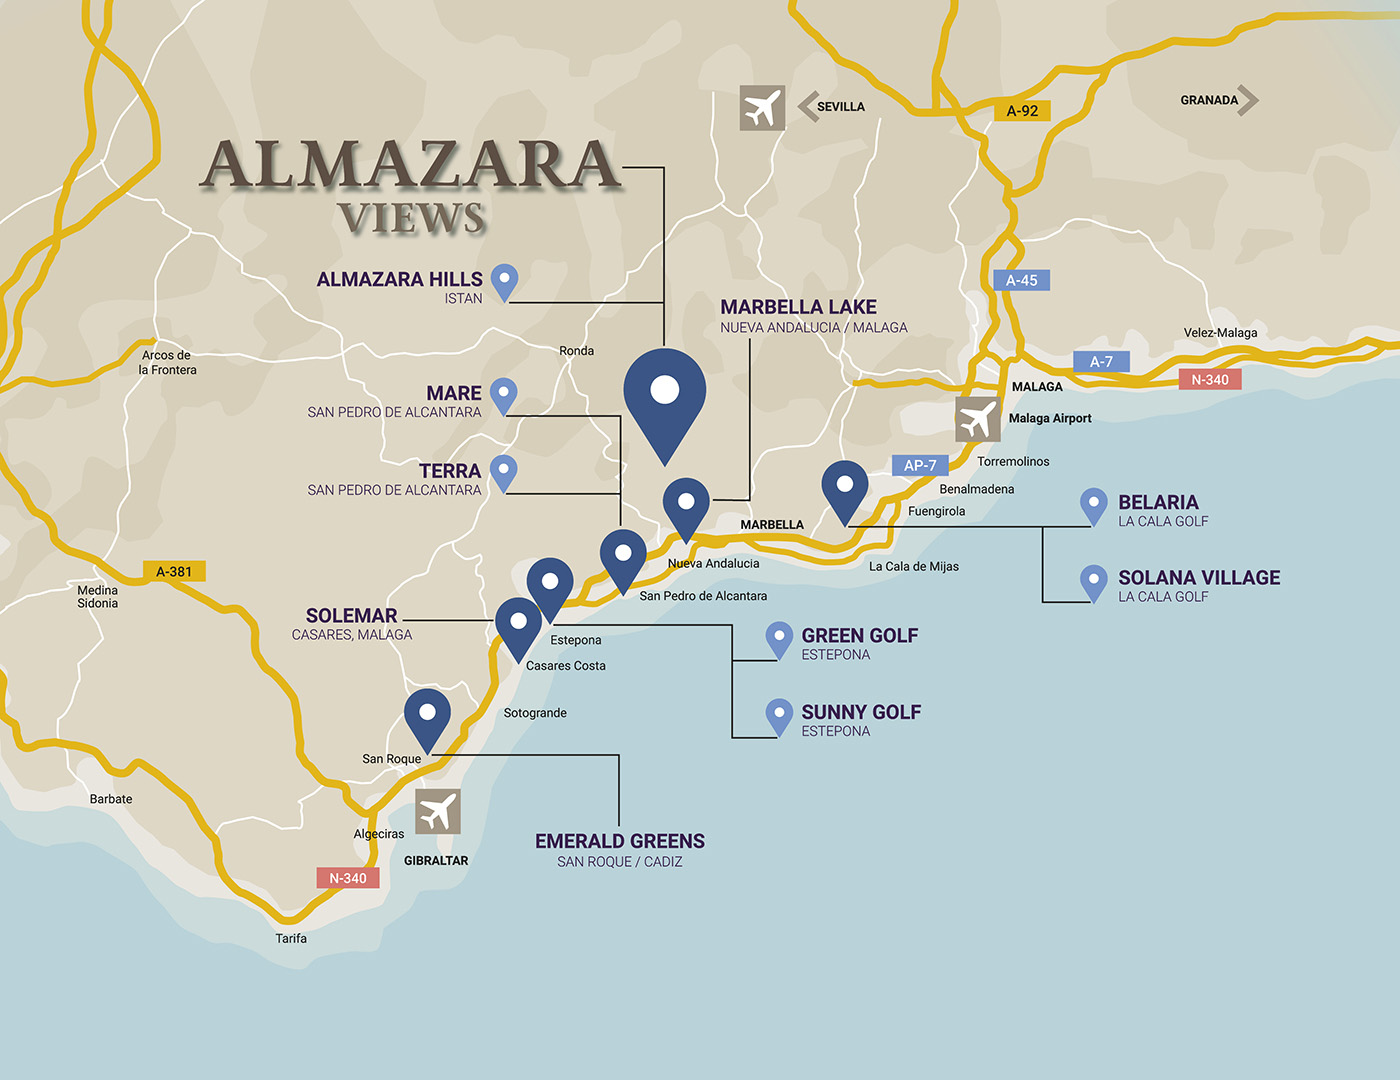 Mapa ALMAZARA VIEWS movil ageng